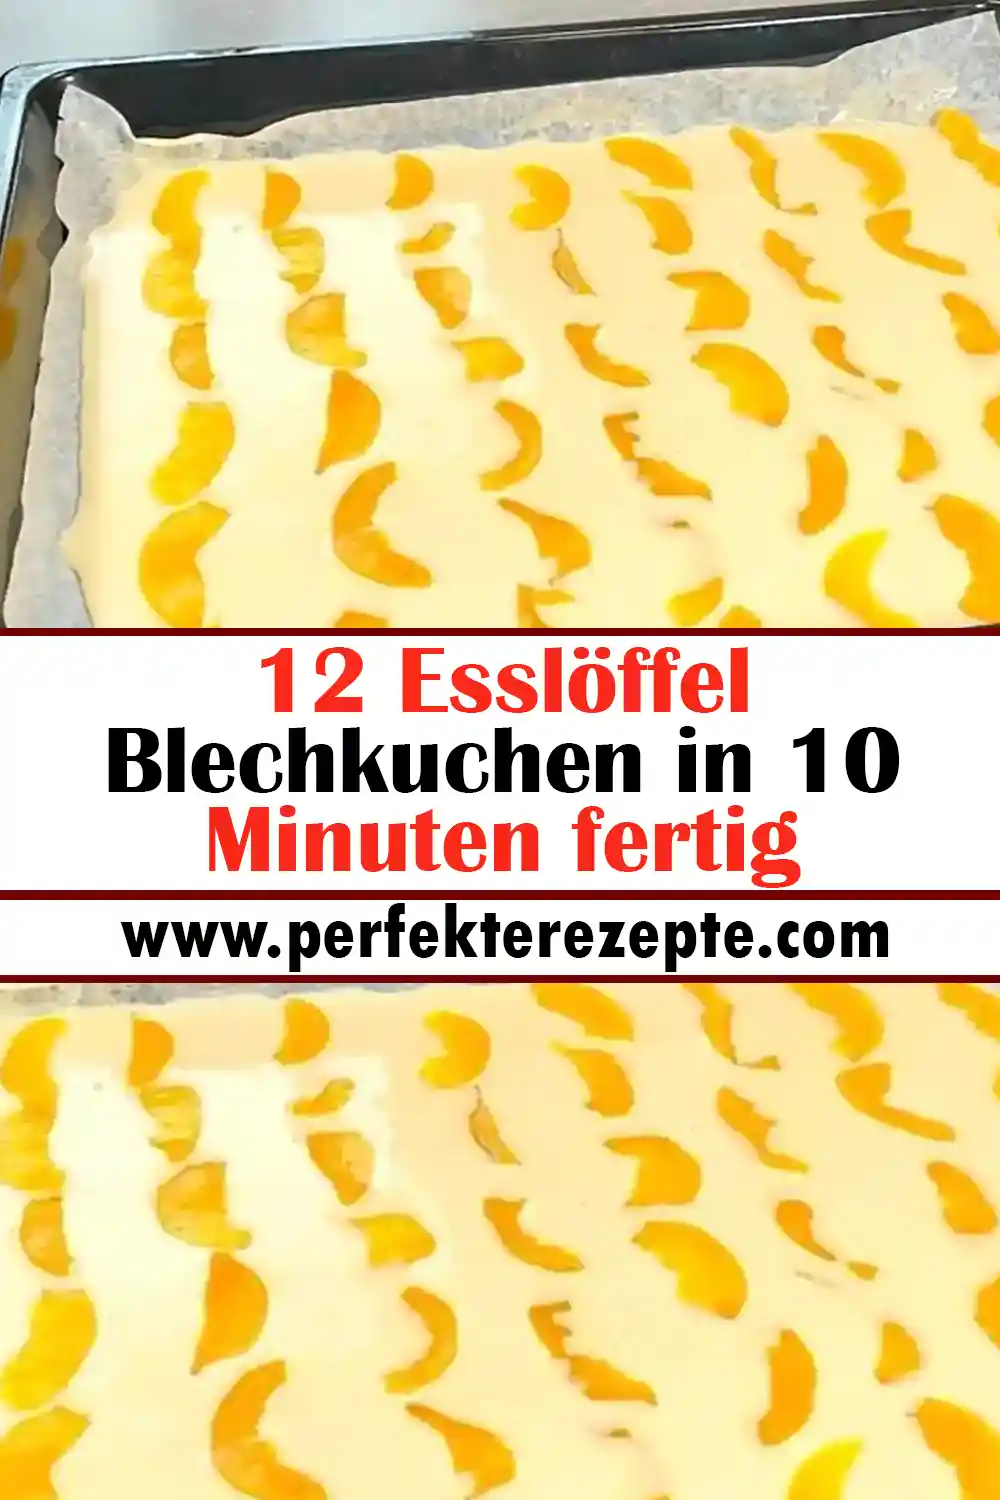 12 Esslöffel Blechkuchen in 10 Minuten fertig, inklusive Backzeit